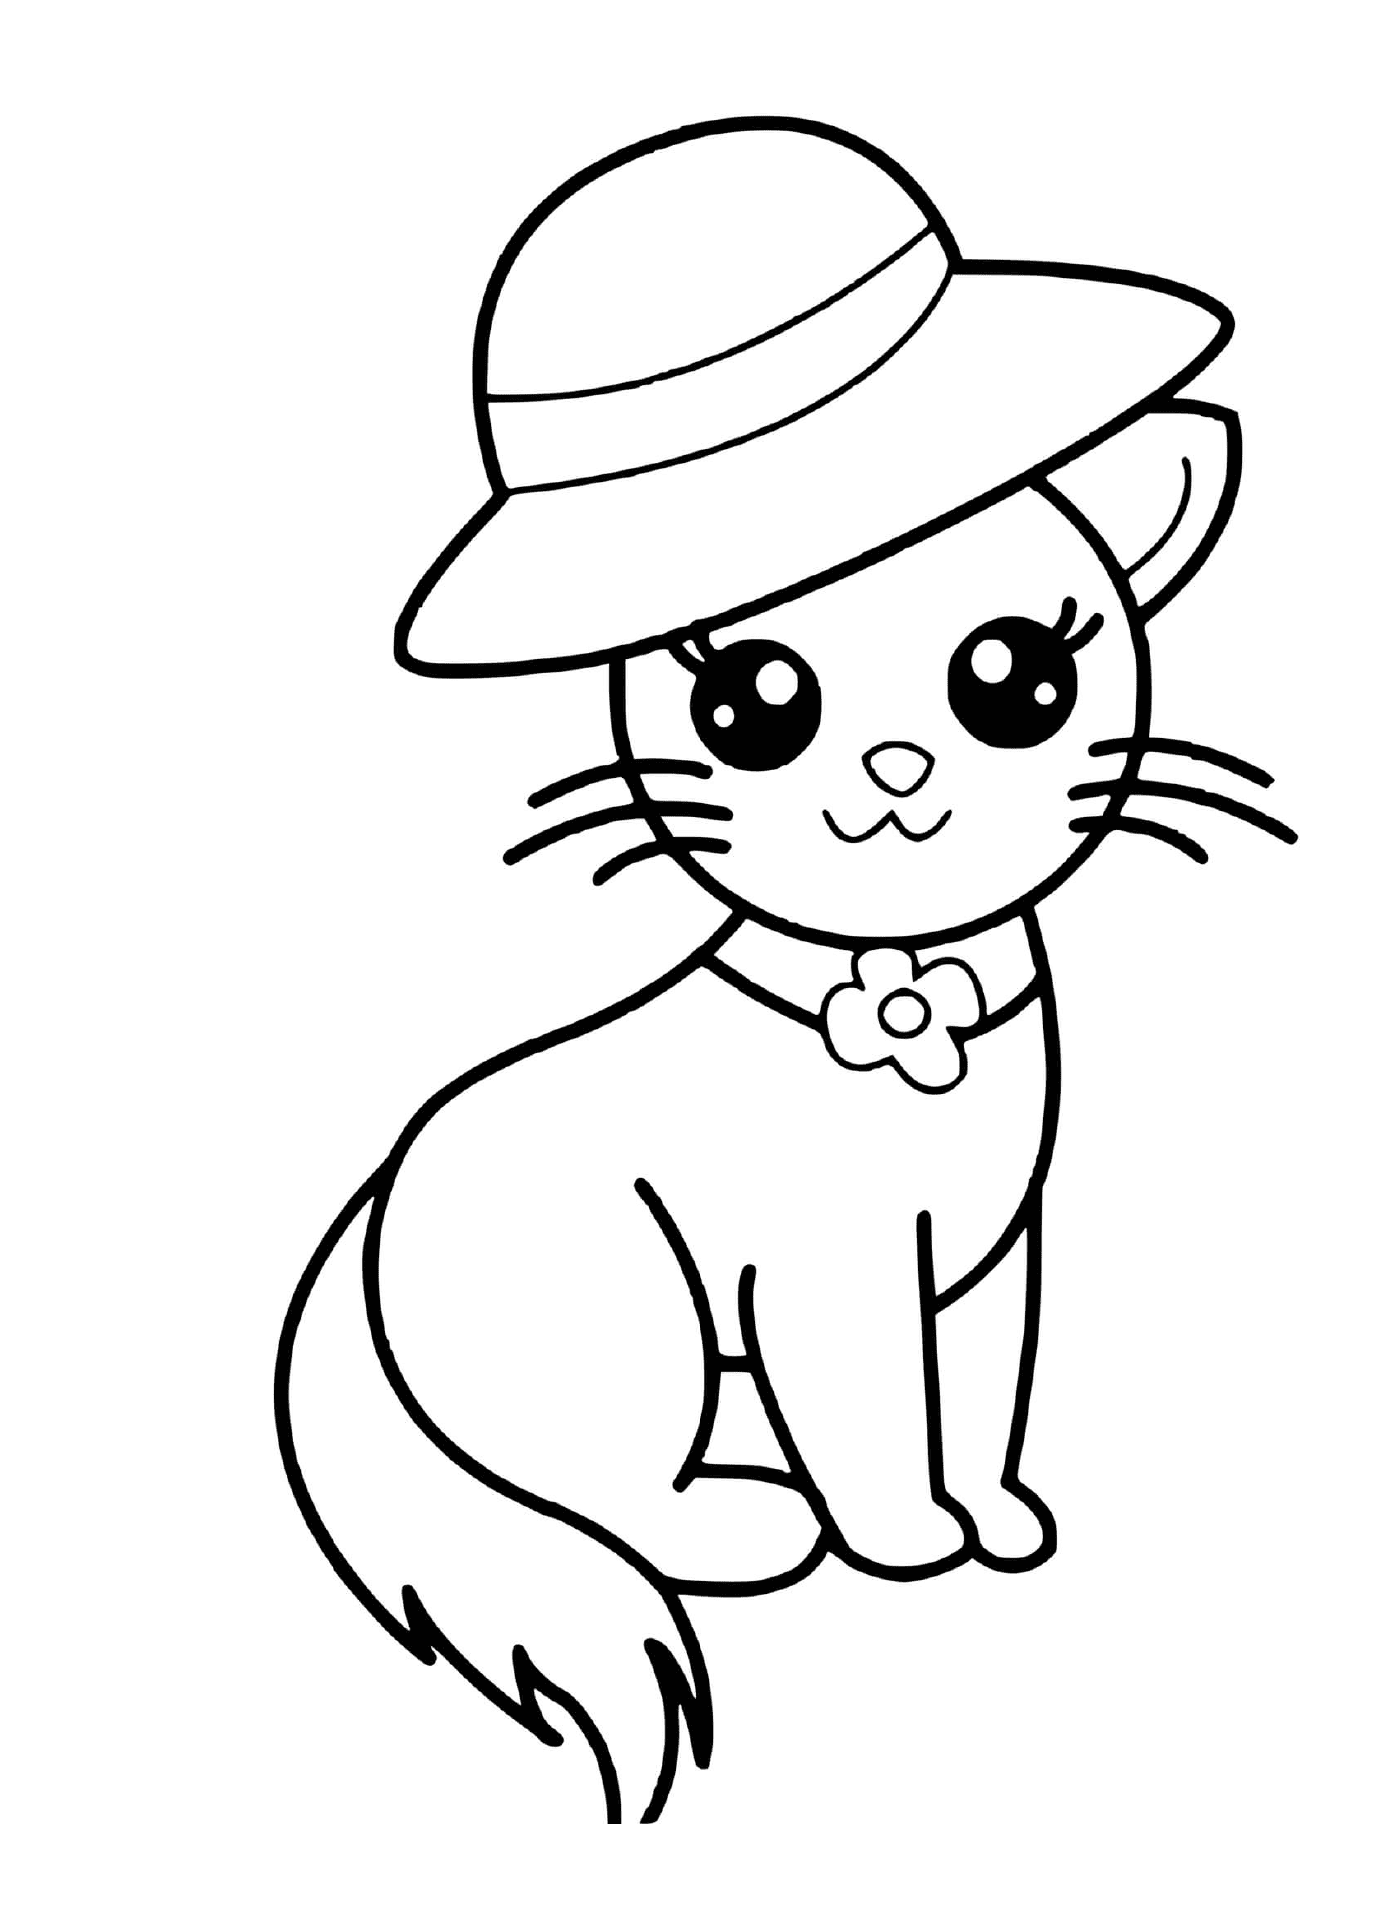  Elegante gato kawaii con un sombrero chic 